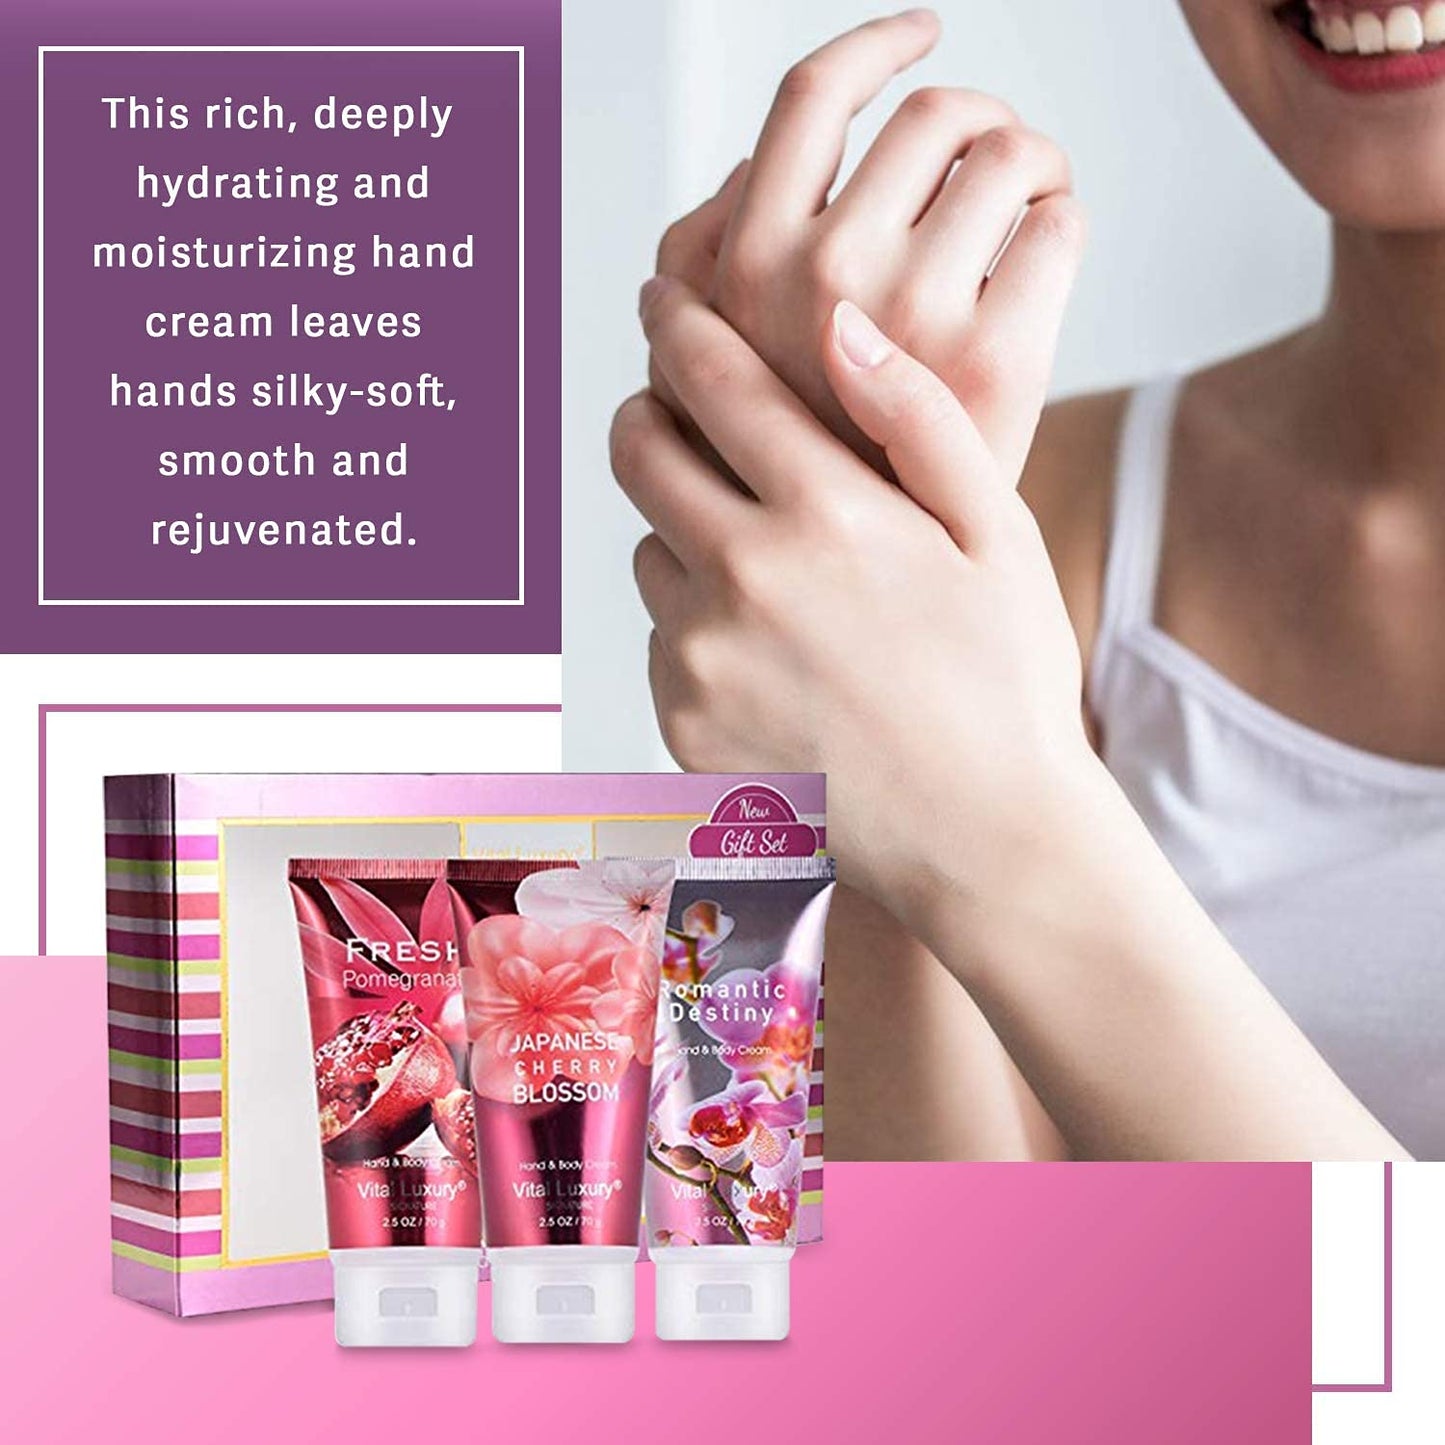 Vital Luxury 3Pcs Gift Set Hand & Body Cream, Deeply Moisturizing for Rough Hands - Travel Size 2.5oz Each